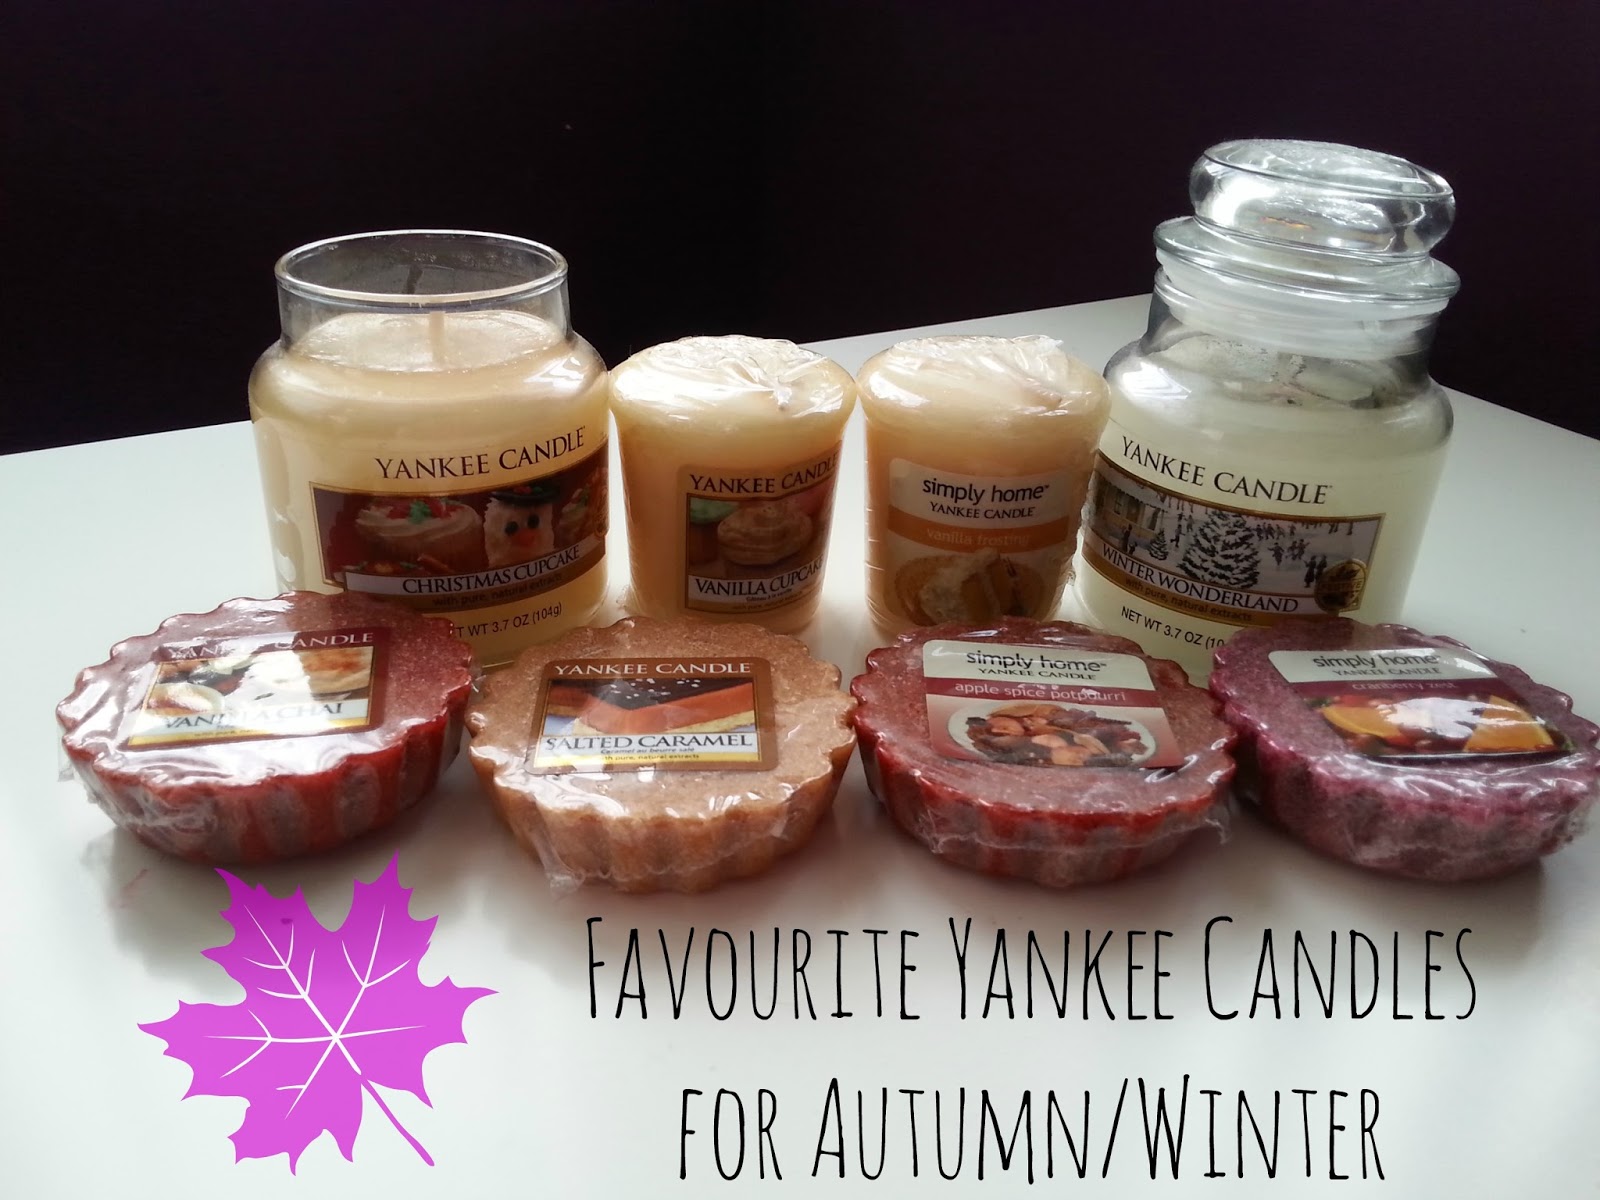 Favourite Yankee Candles for Autumn/Winter ♥ - Class & Glitter